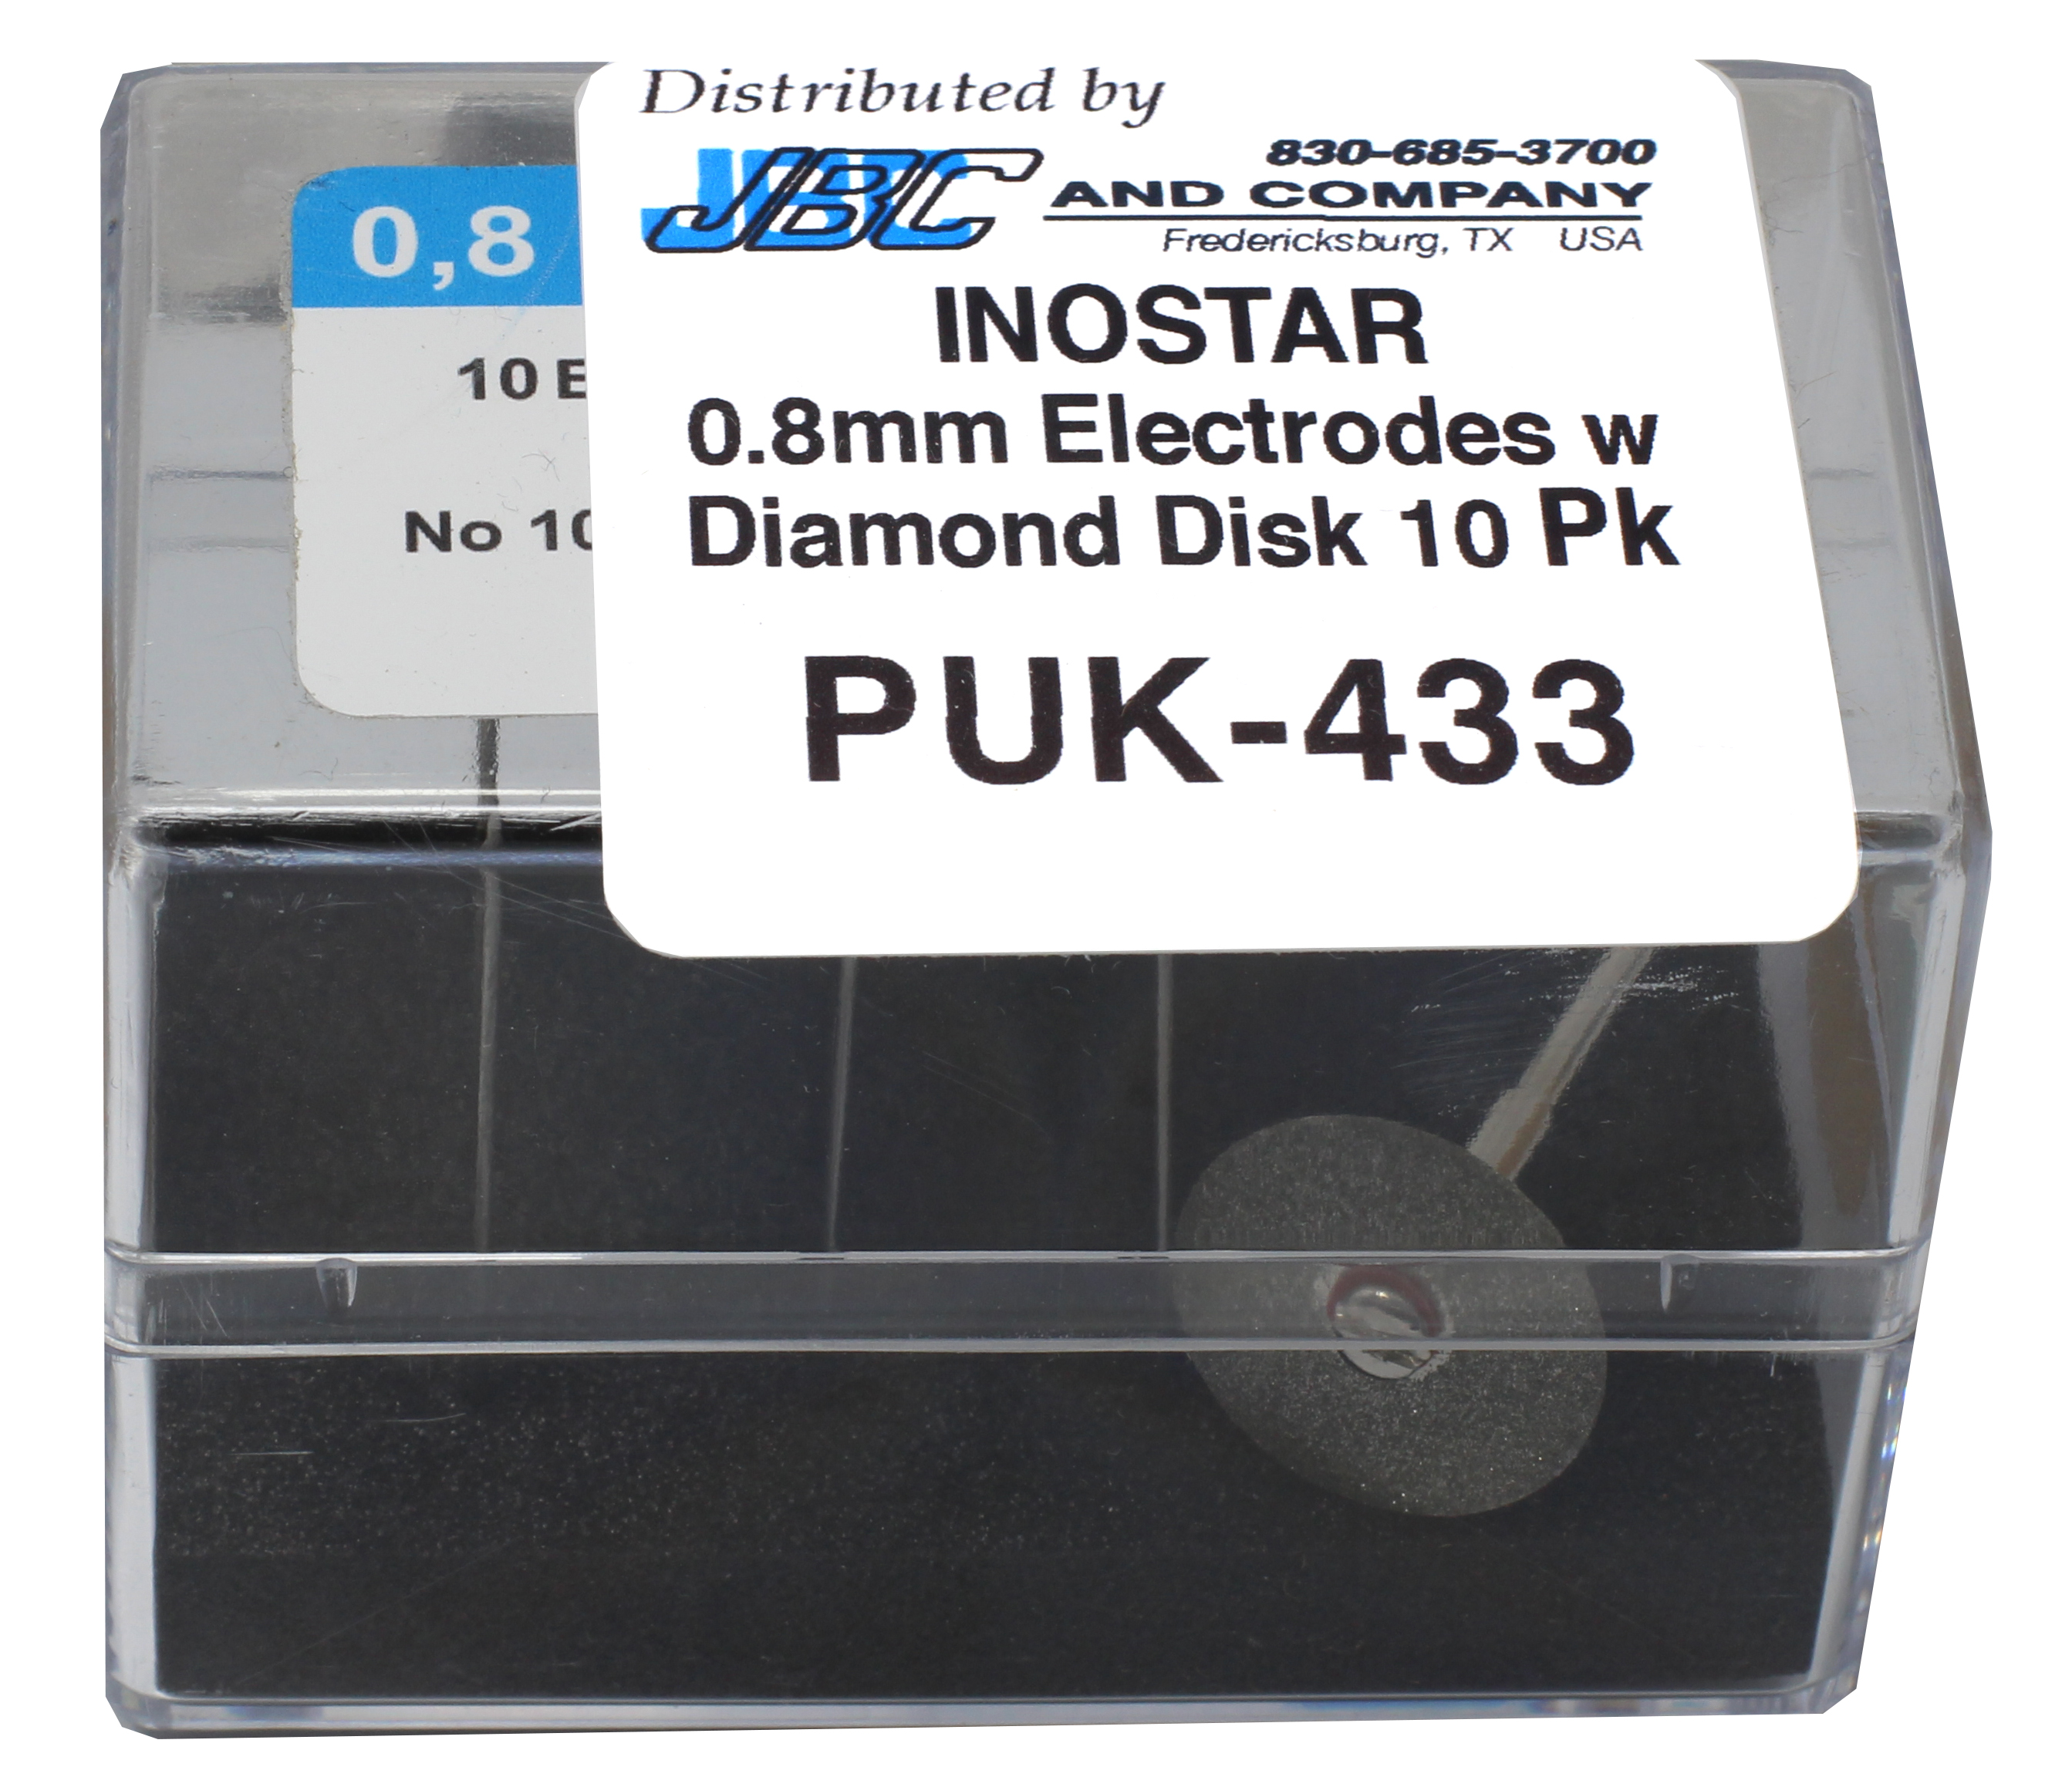 PUK-433: INOSTAR 0.8 mm Electrodes